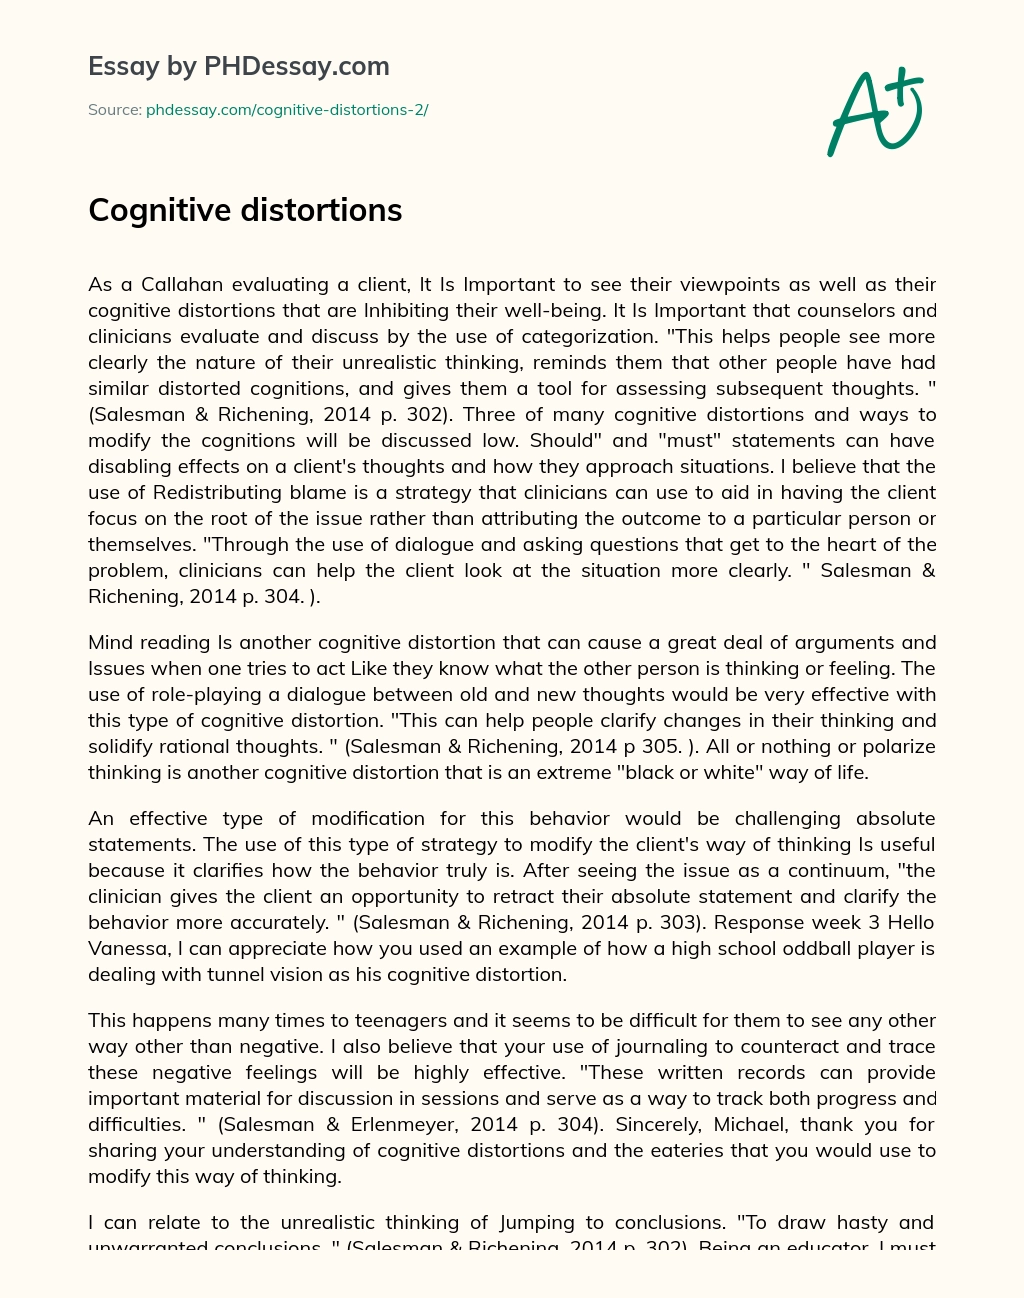 Cognitive distortions essay